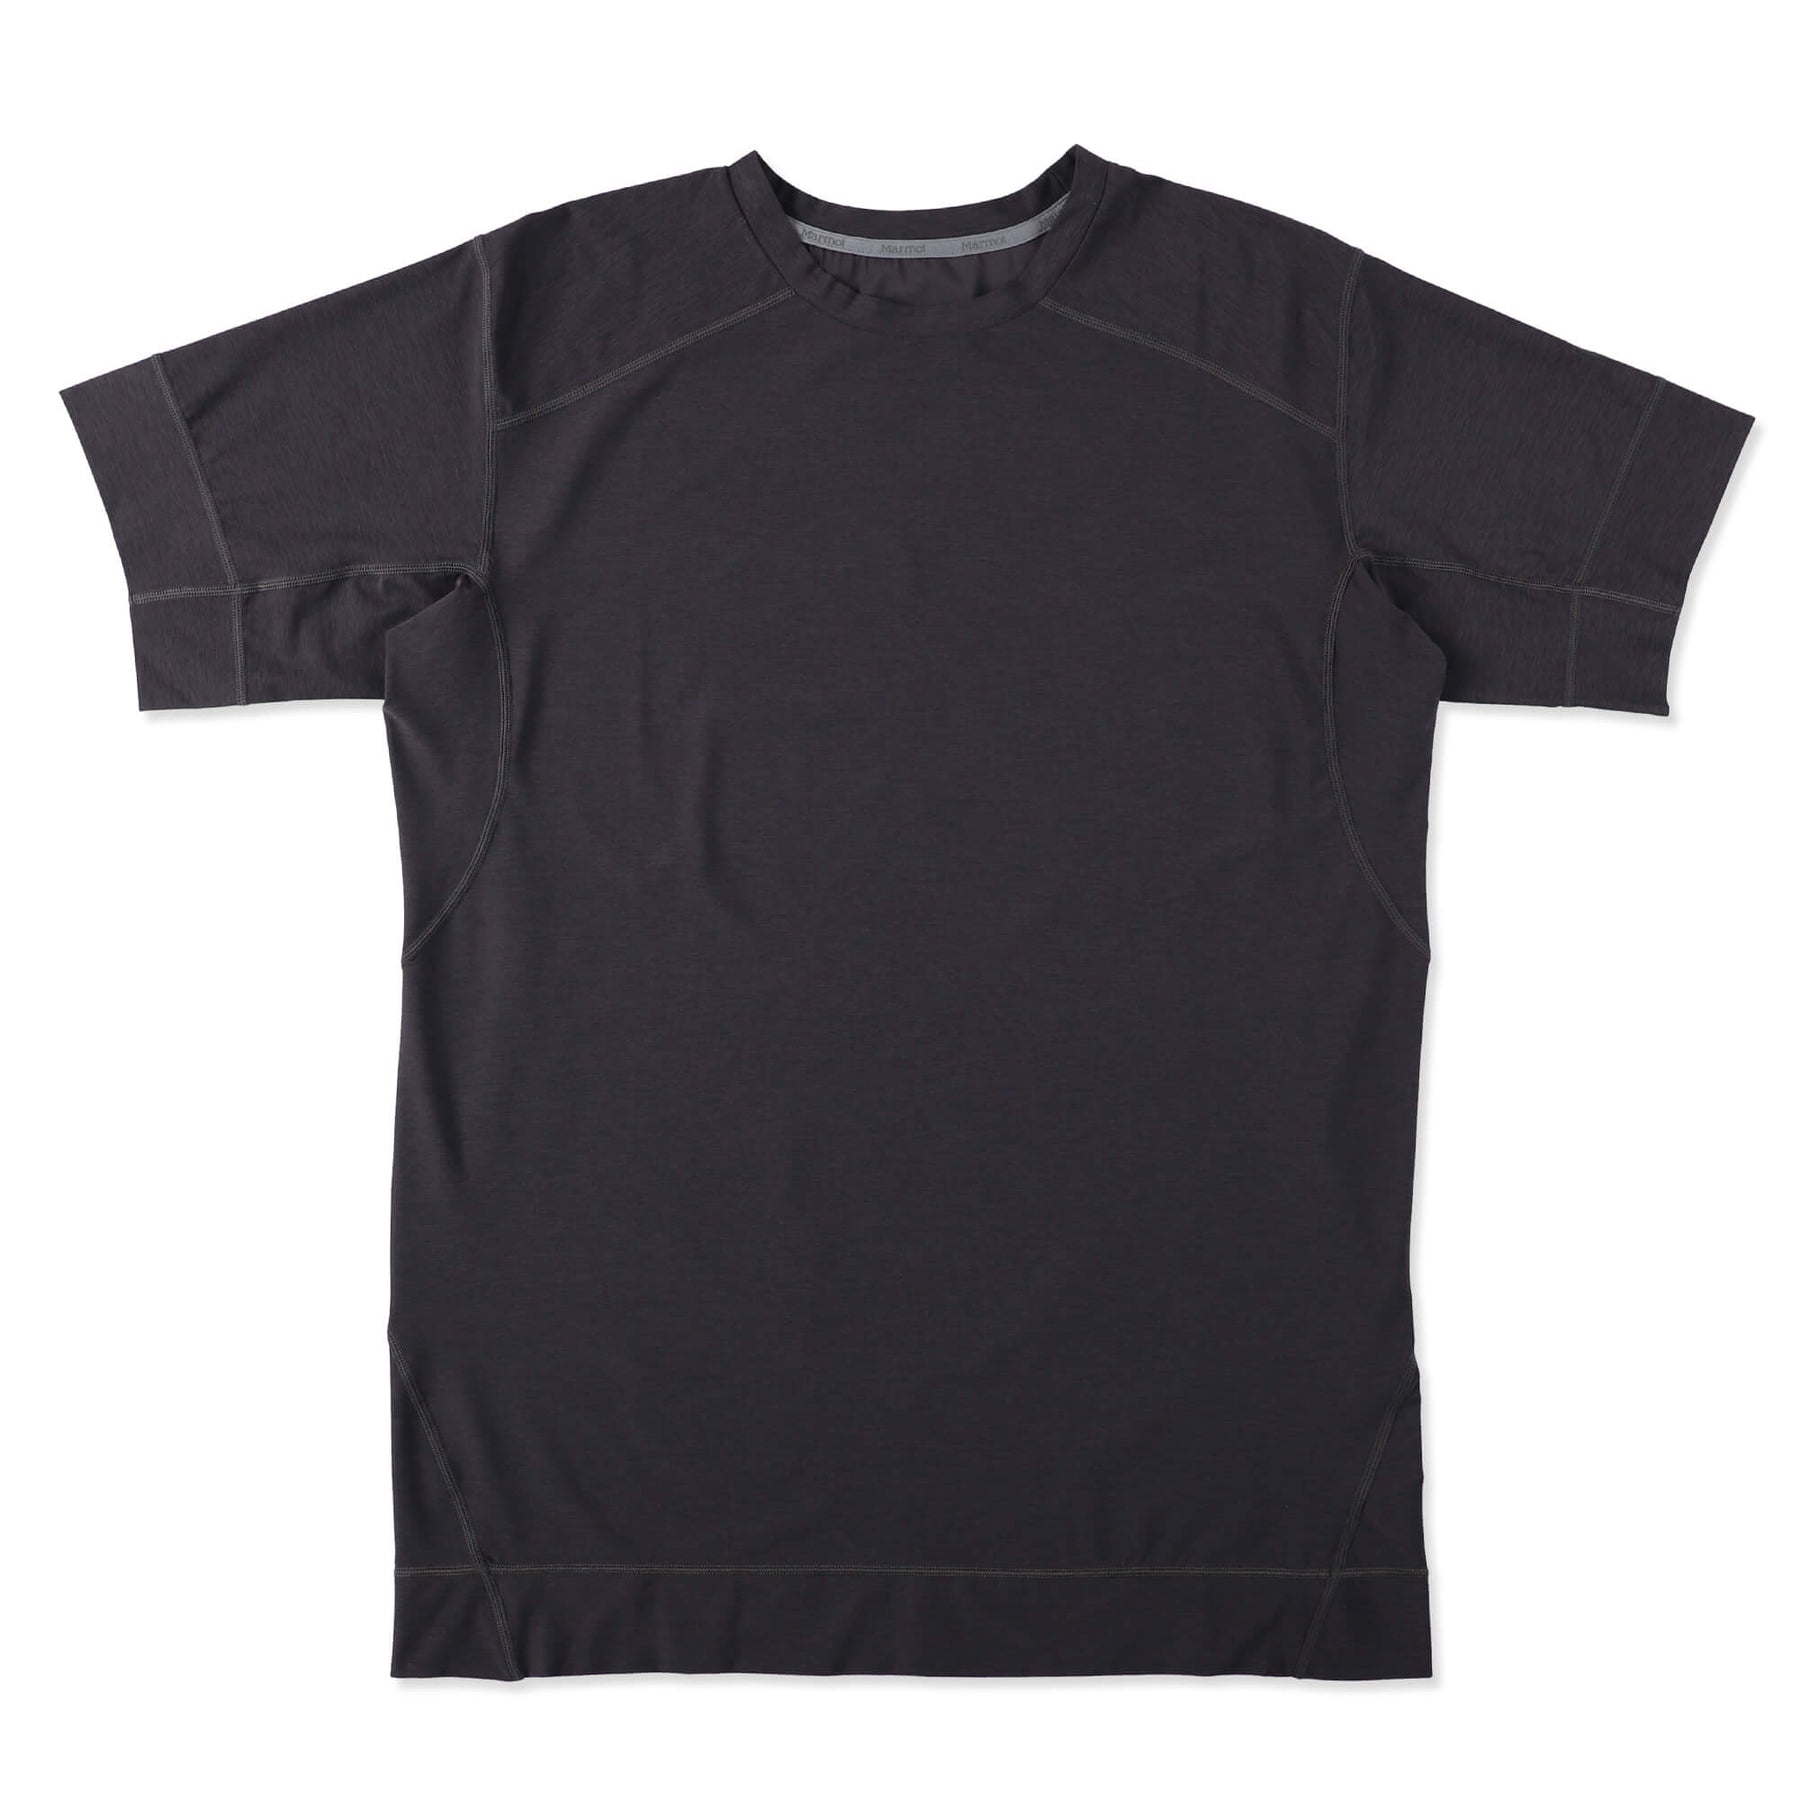 Graphene S/S Shirt(グラフェンショートスリーブシャツ)